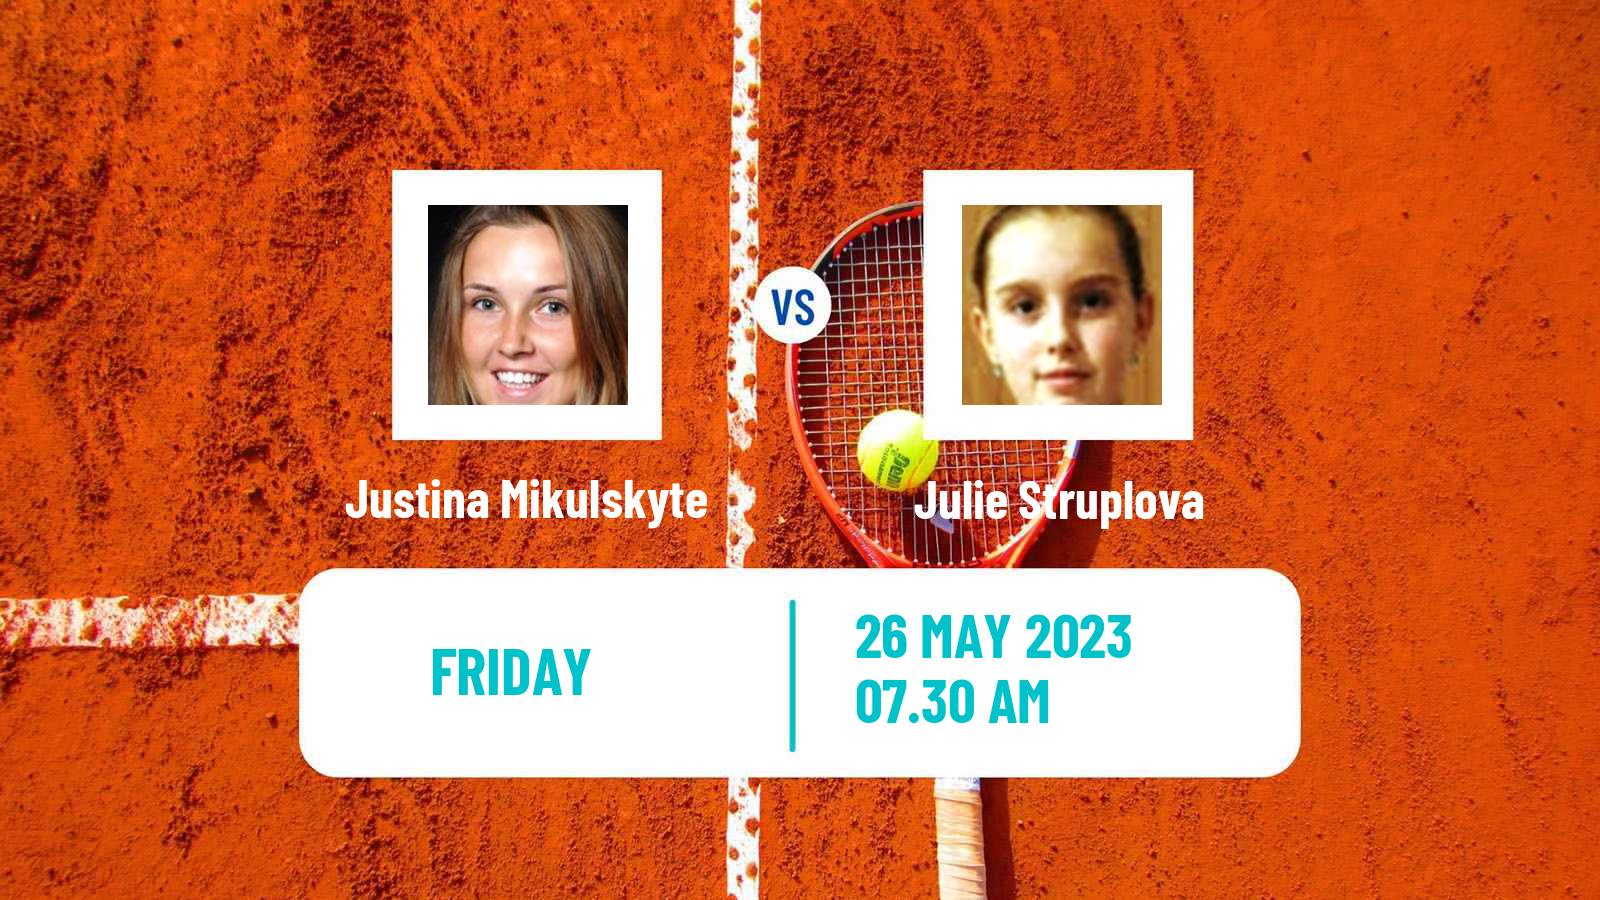 Tennis ITF W25 Warmbad Villach Women Justina Mikulskyte - Julie Struplova